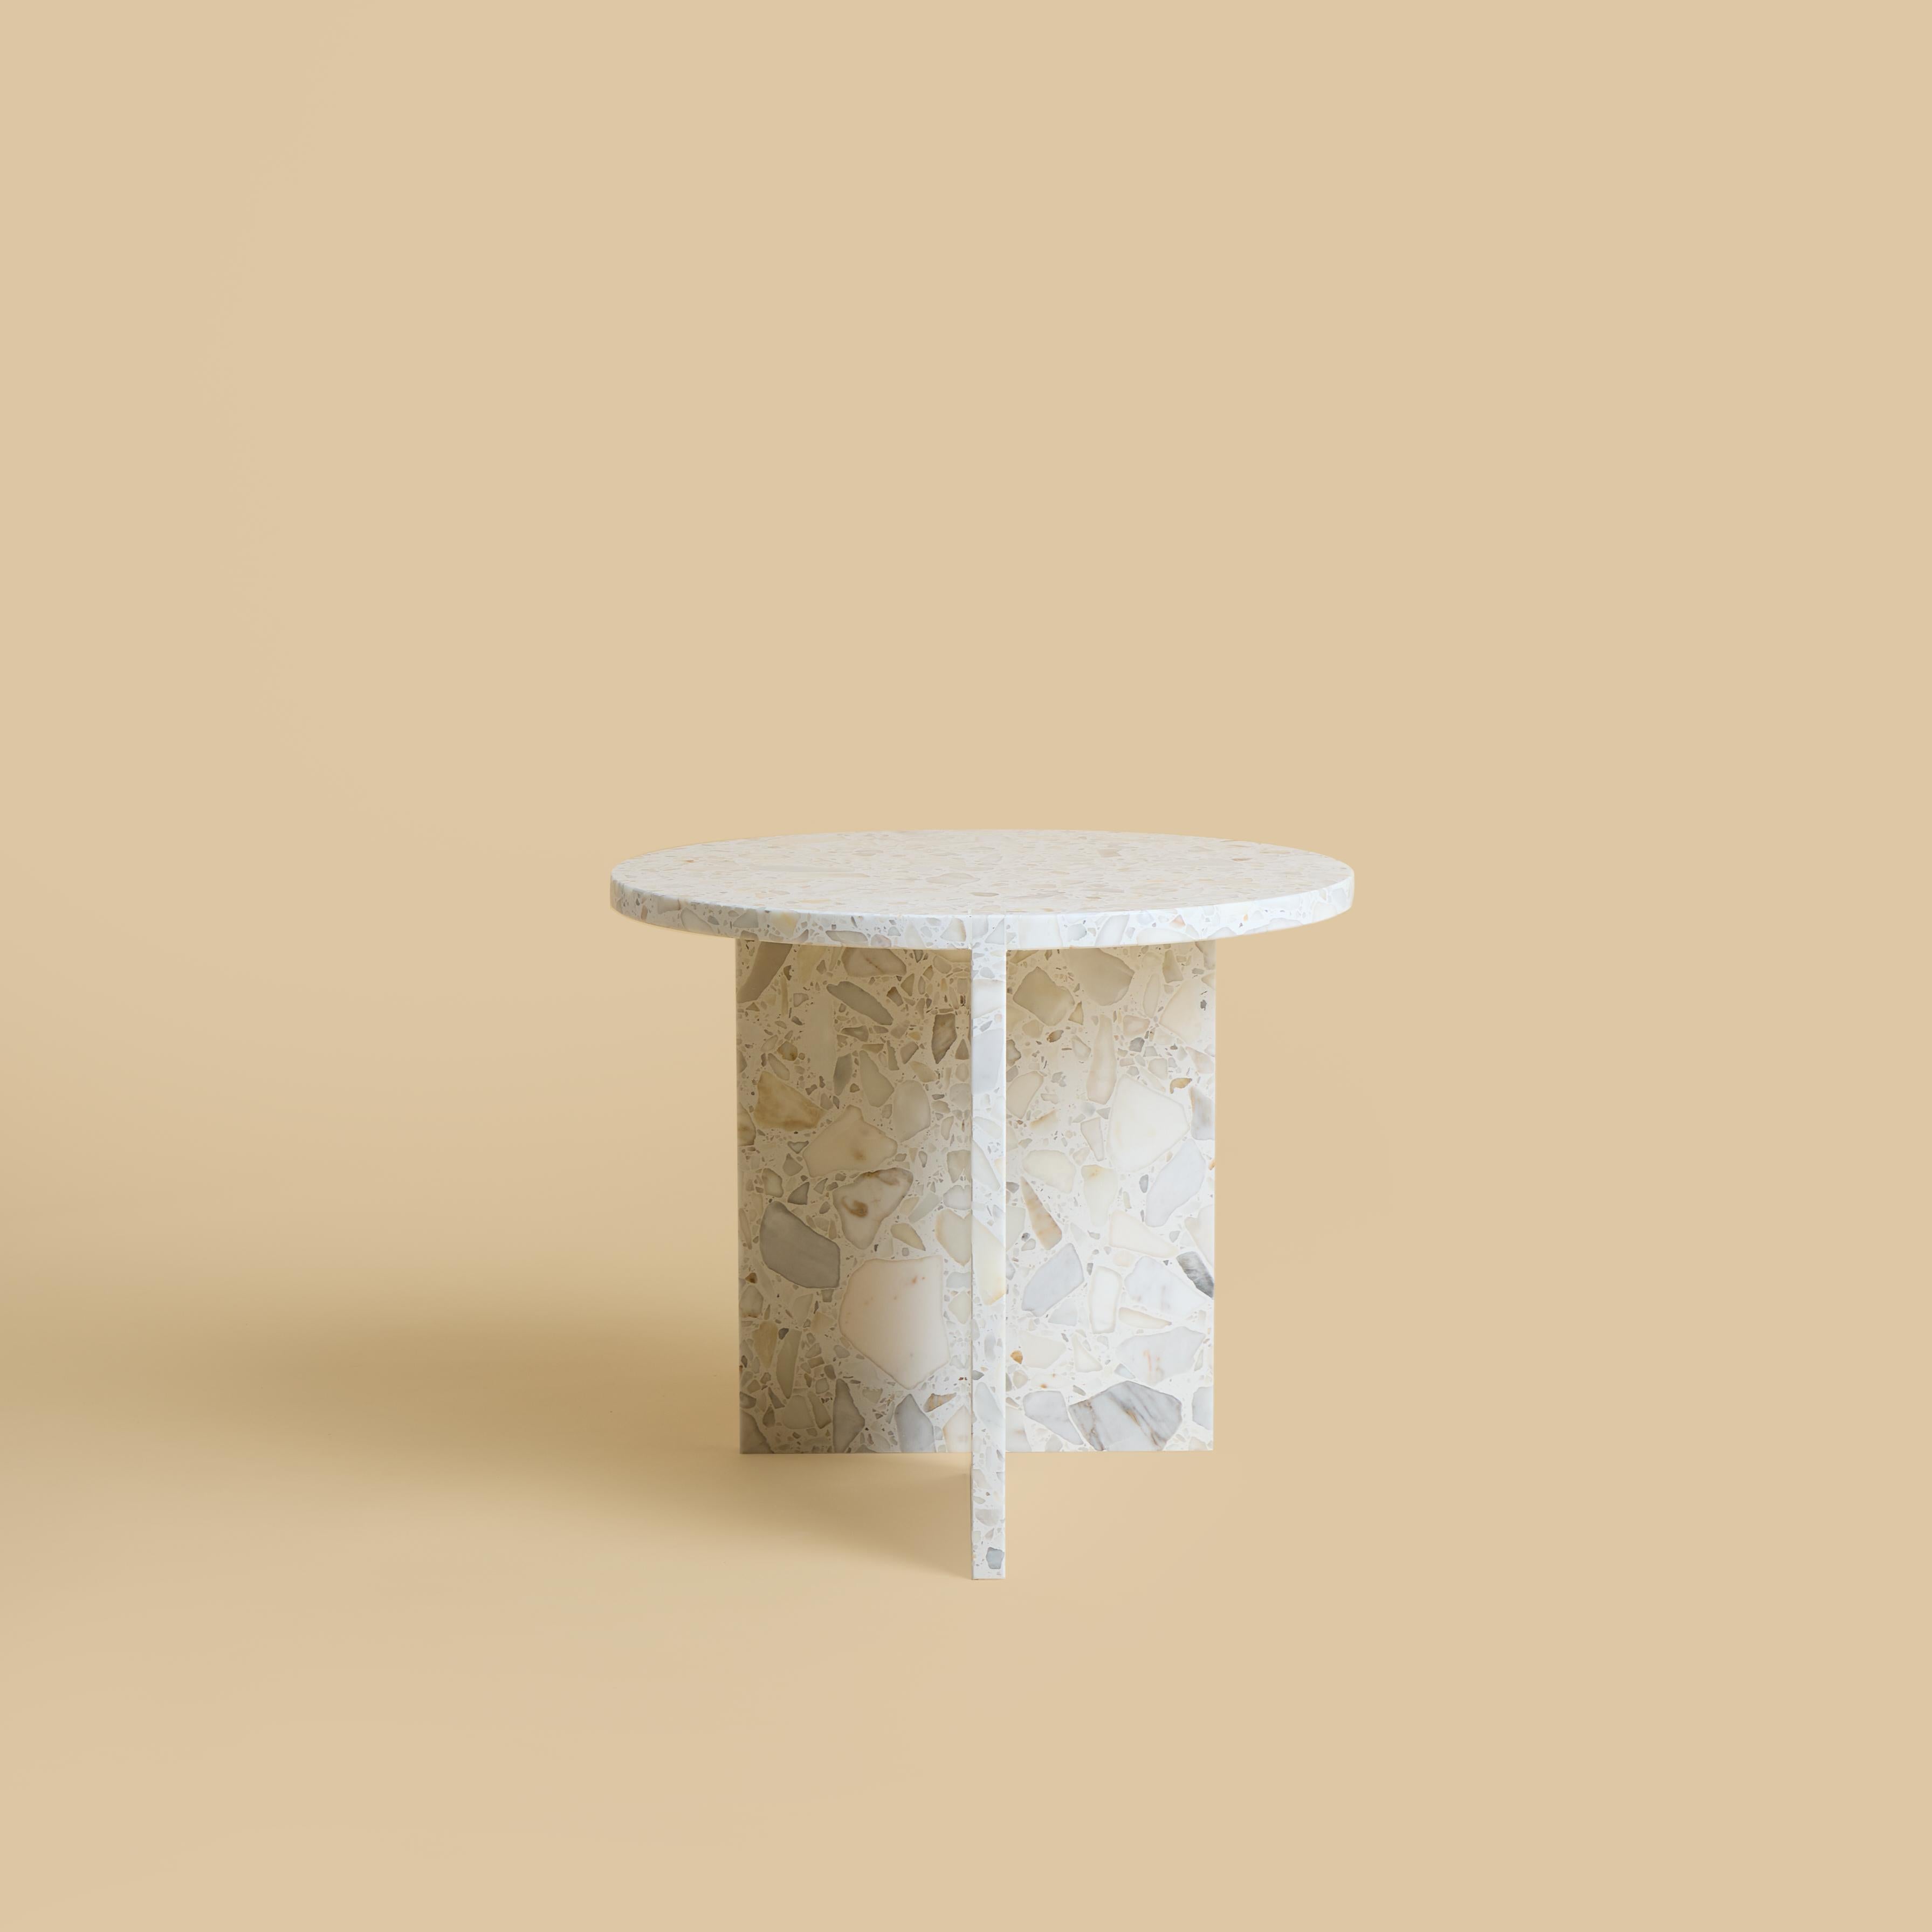 italien Table basse circulaire en marbre de Carrare et terrazzo, fabriquée en Italie en vente